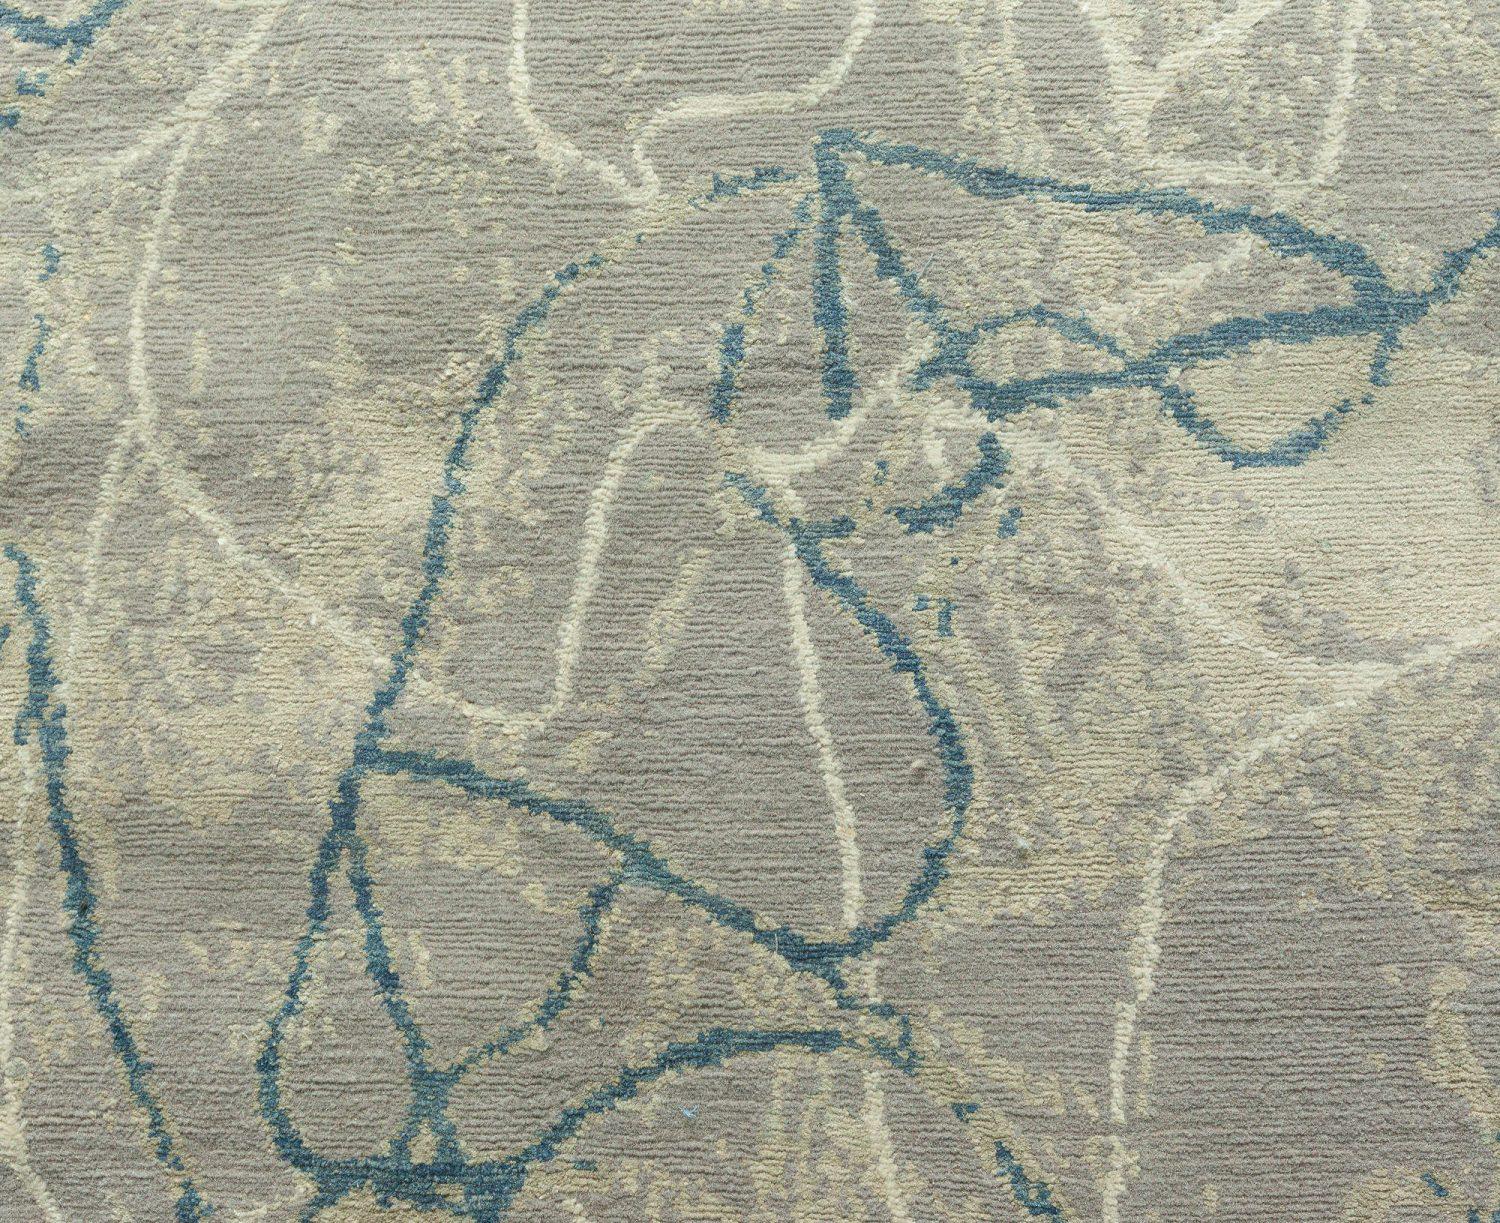 High-quality ink ondulations handmade silk and wool rug by Doris Leslie Blau
Size: 13'0